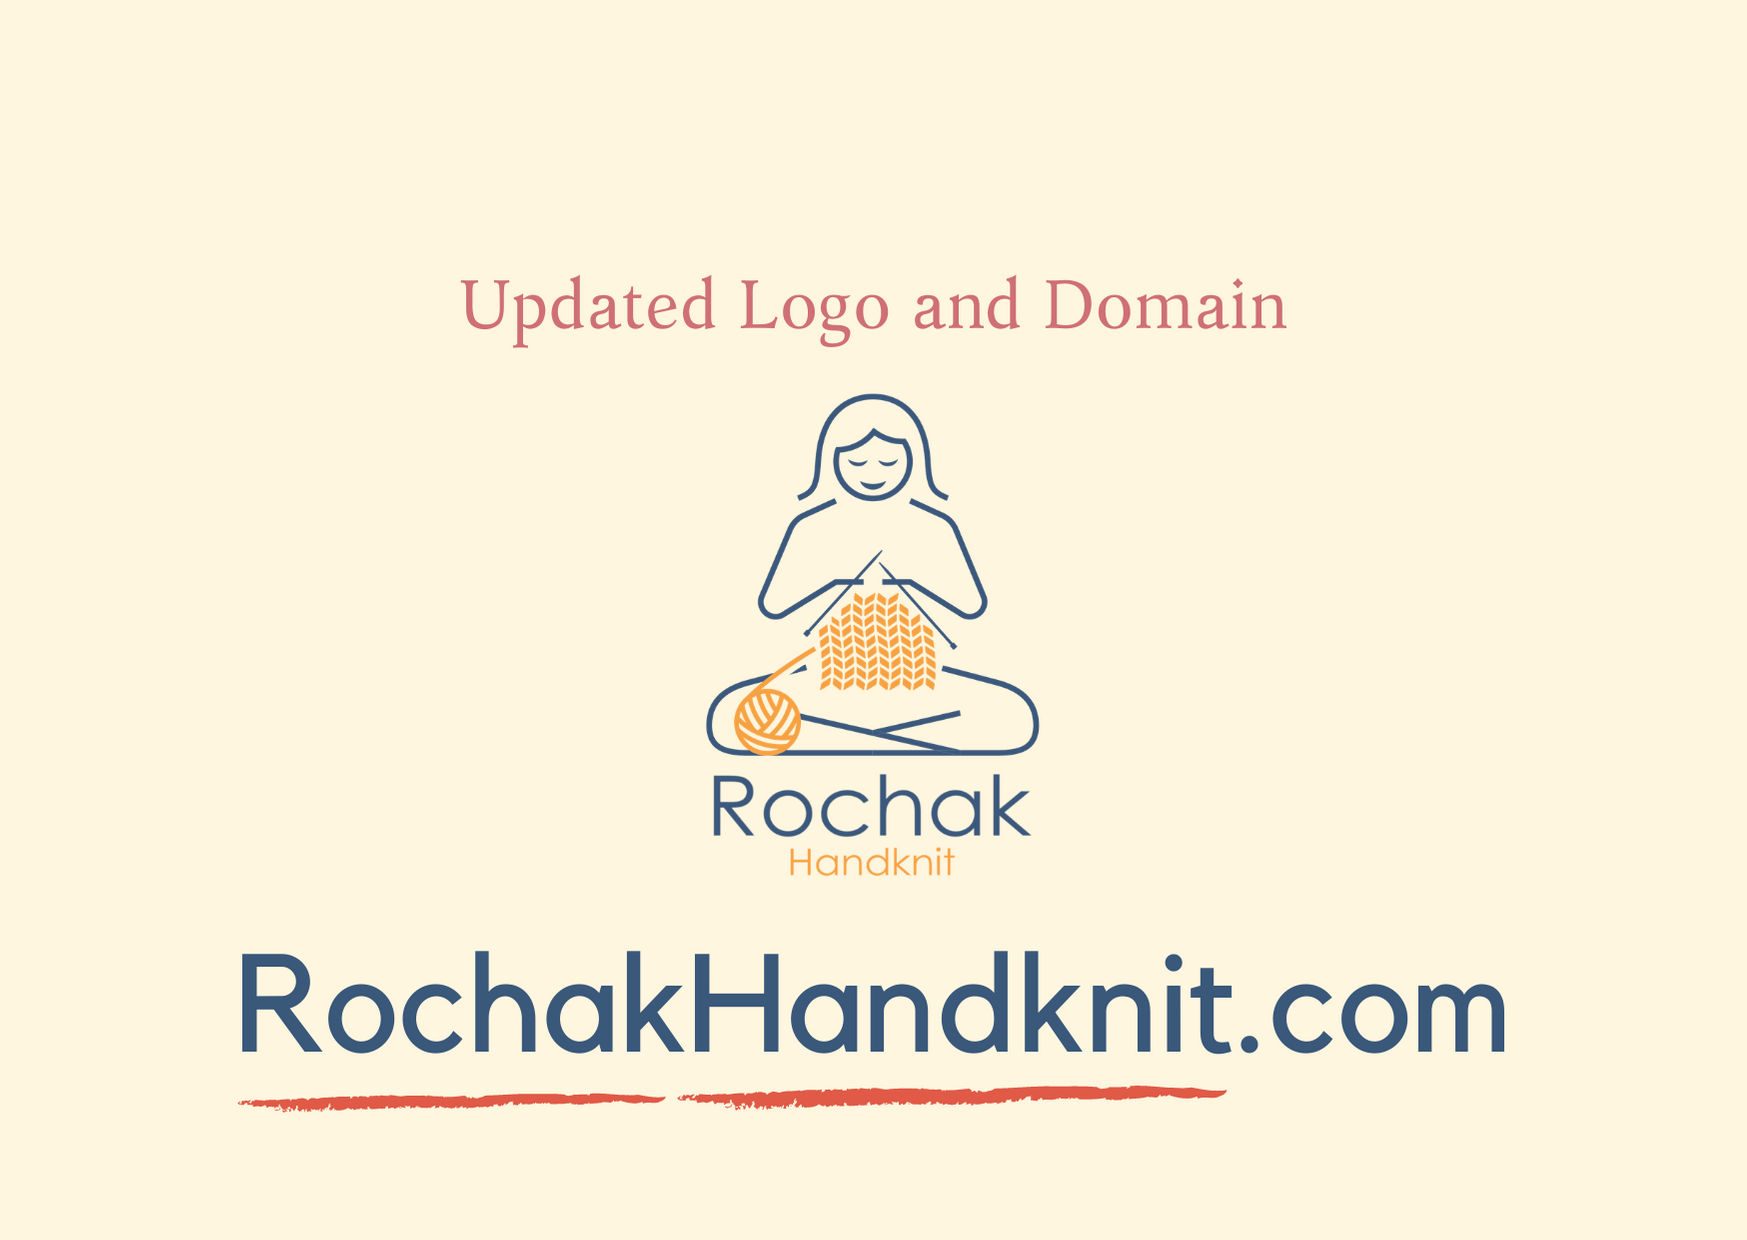 Updated logo & domain of Rochak handknit